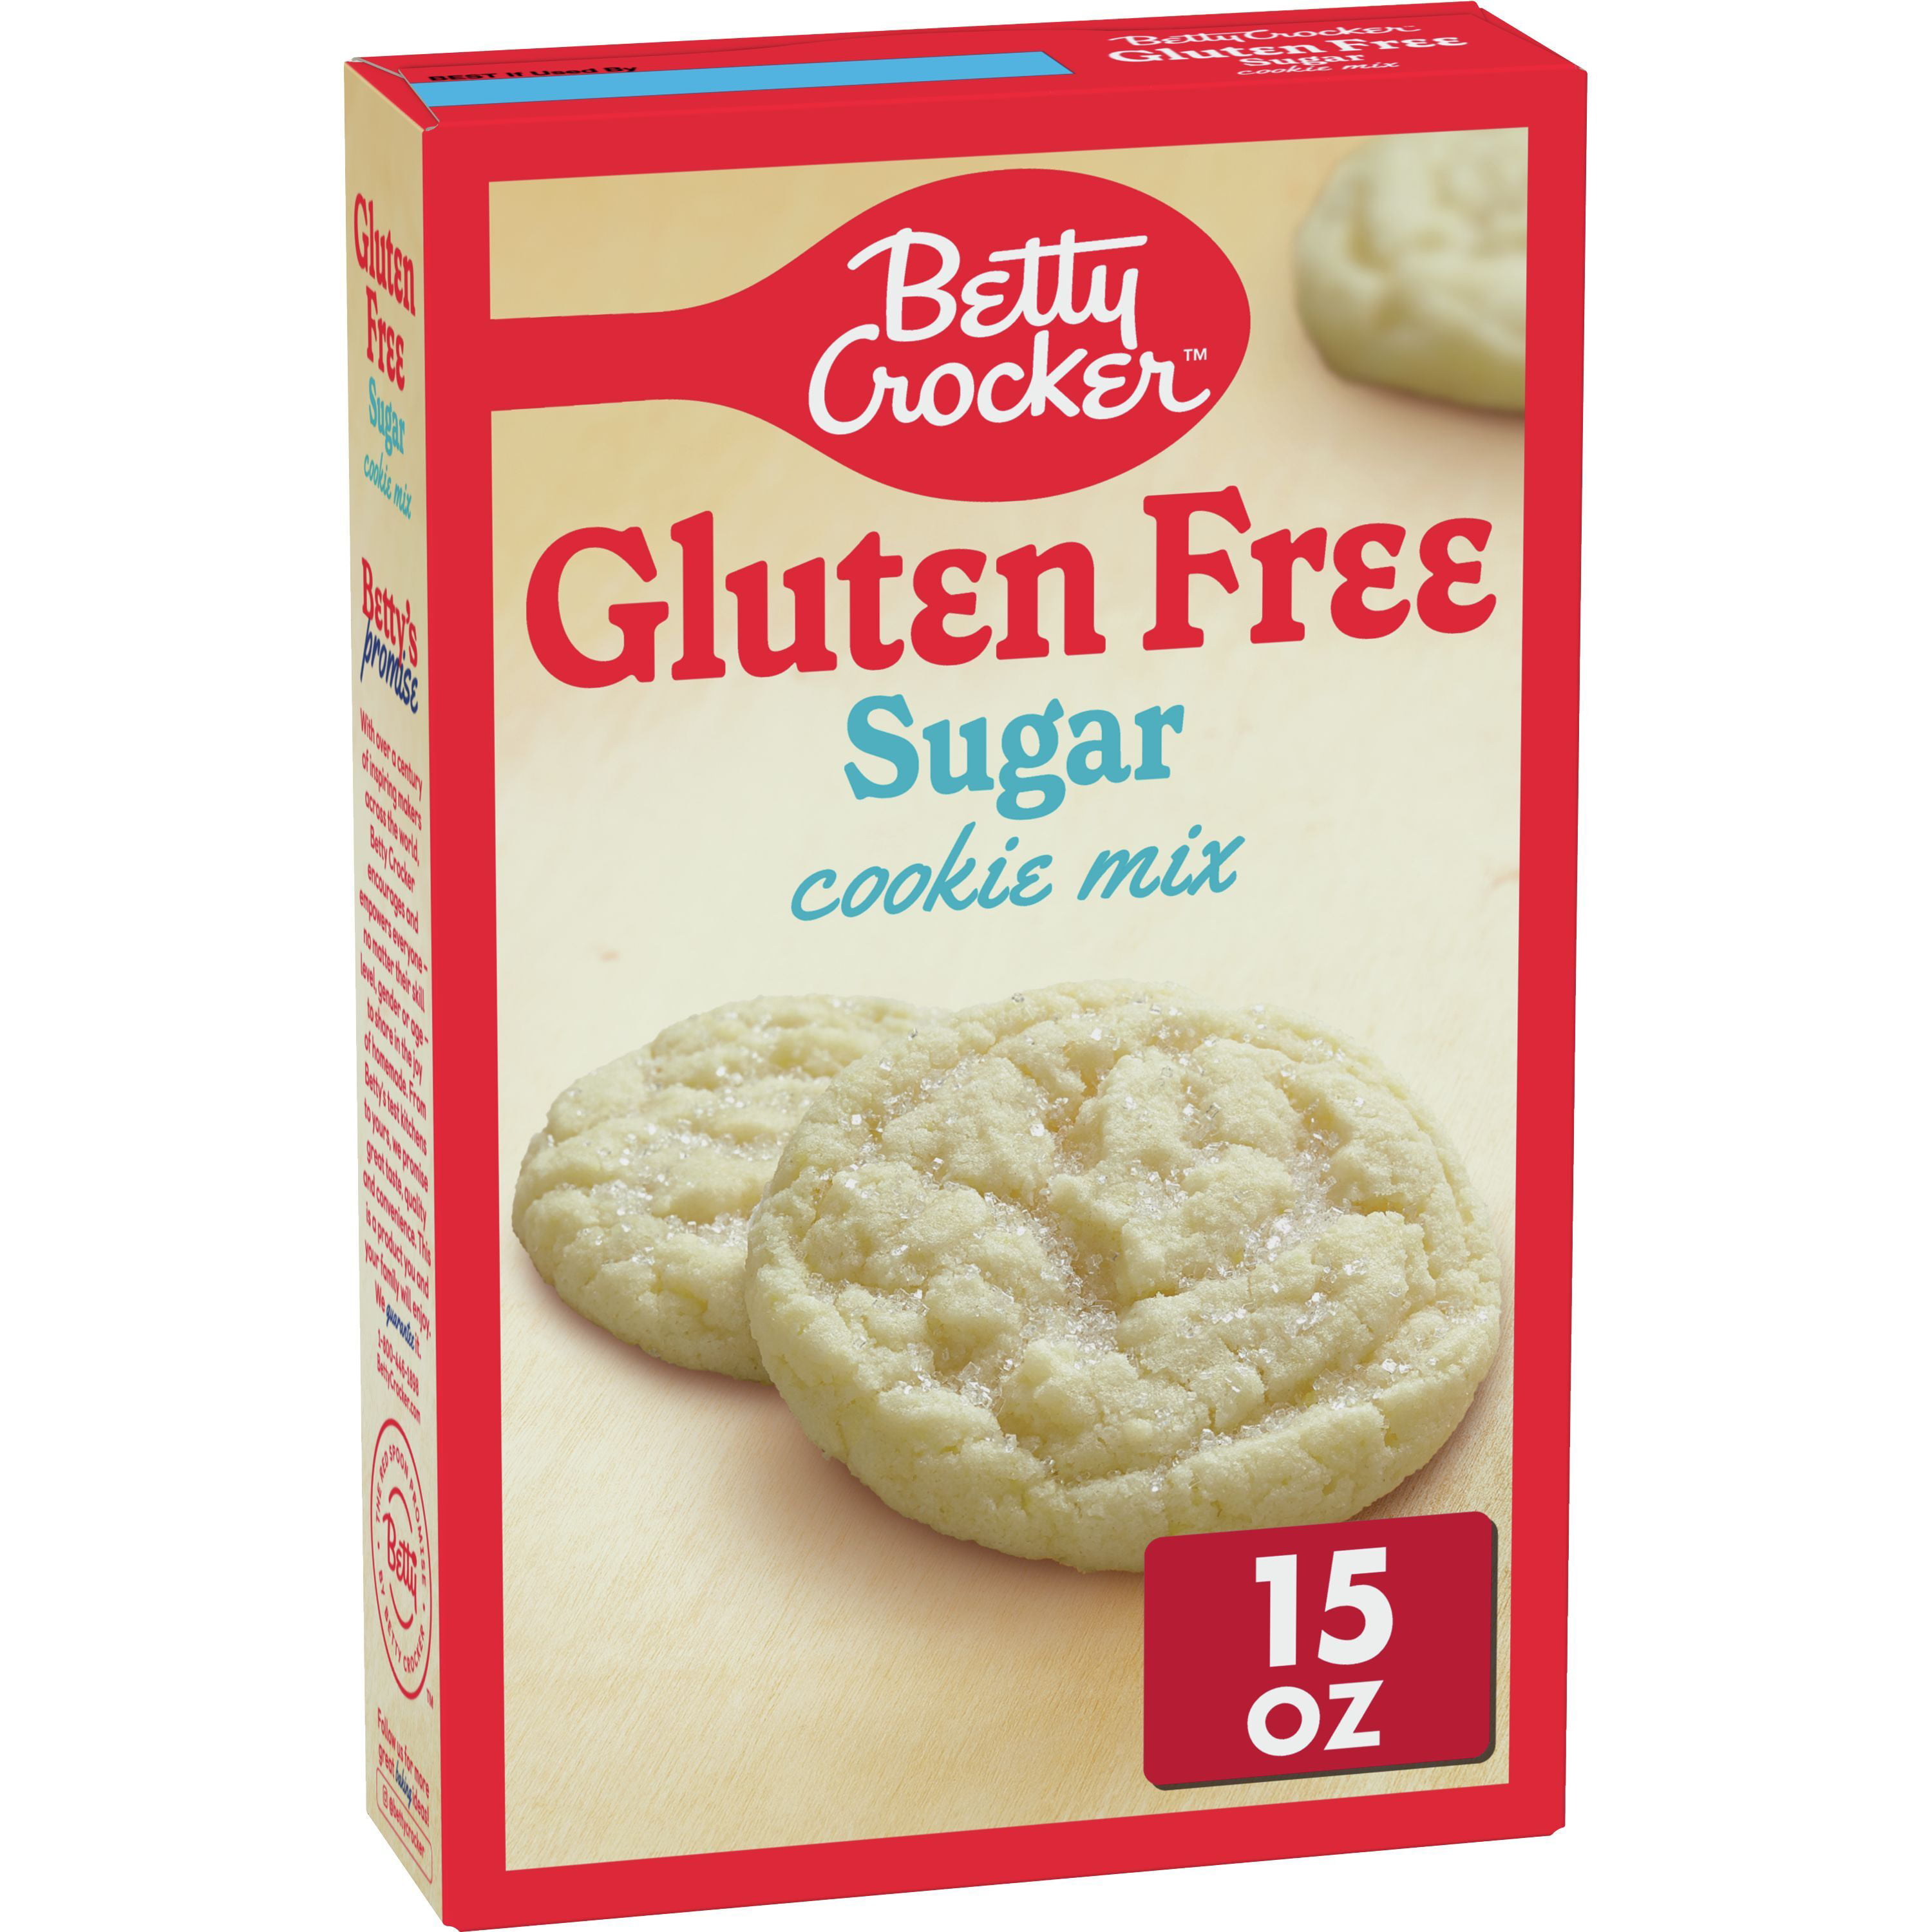 Betty Crocker Gluten Free, Ready to Bake Sugar Cookie Mix, 15 oz -  